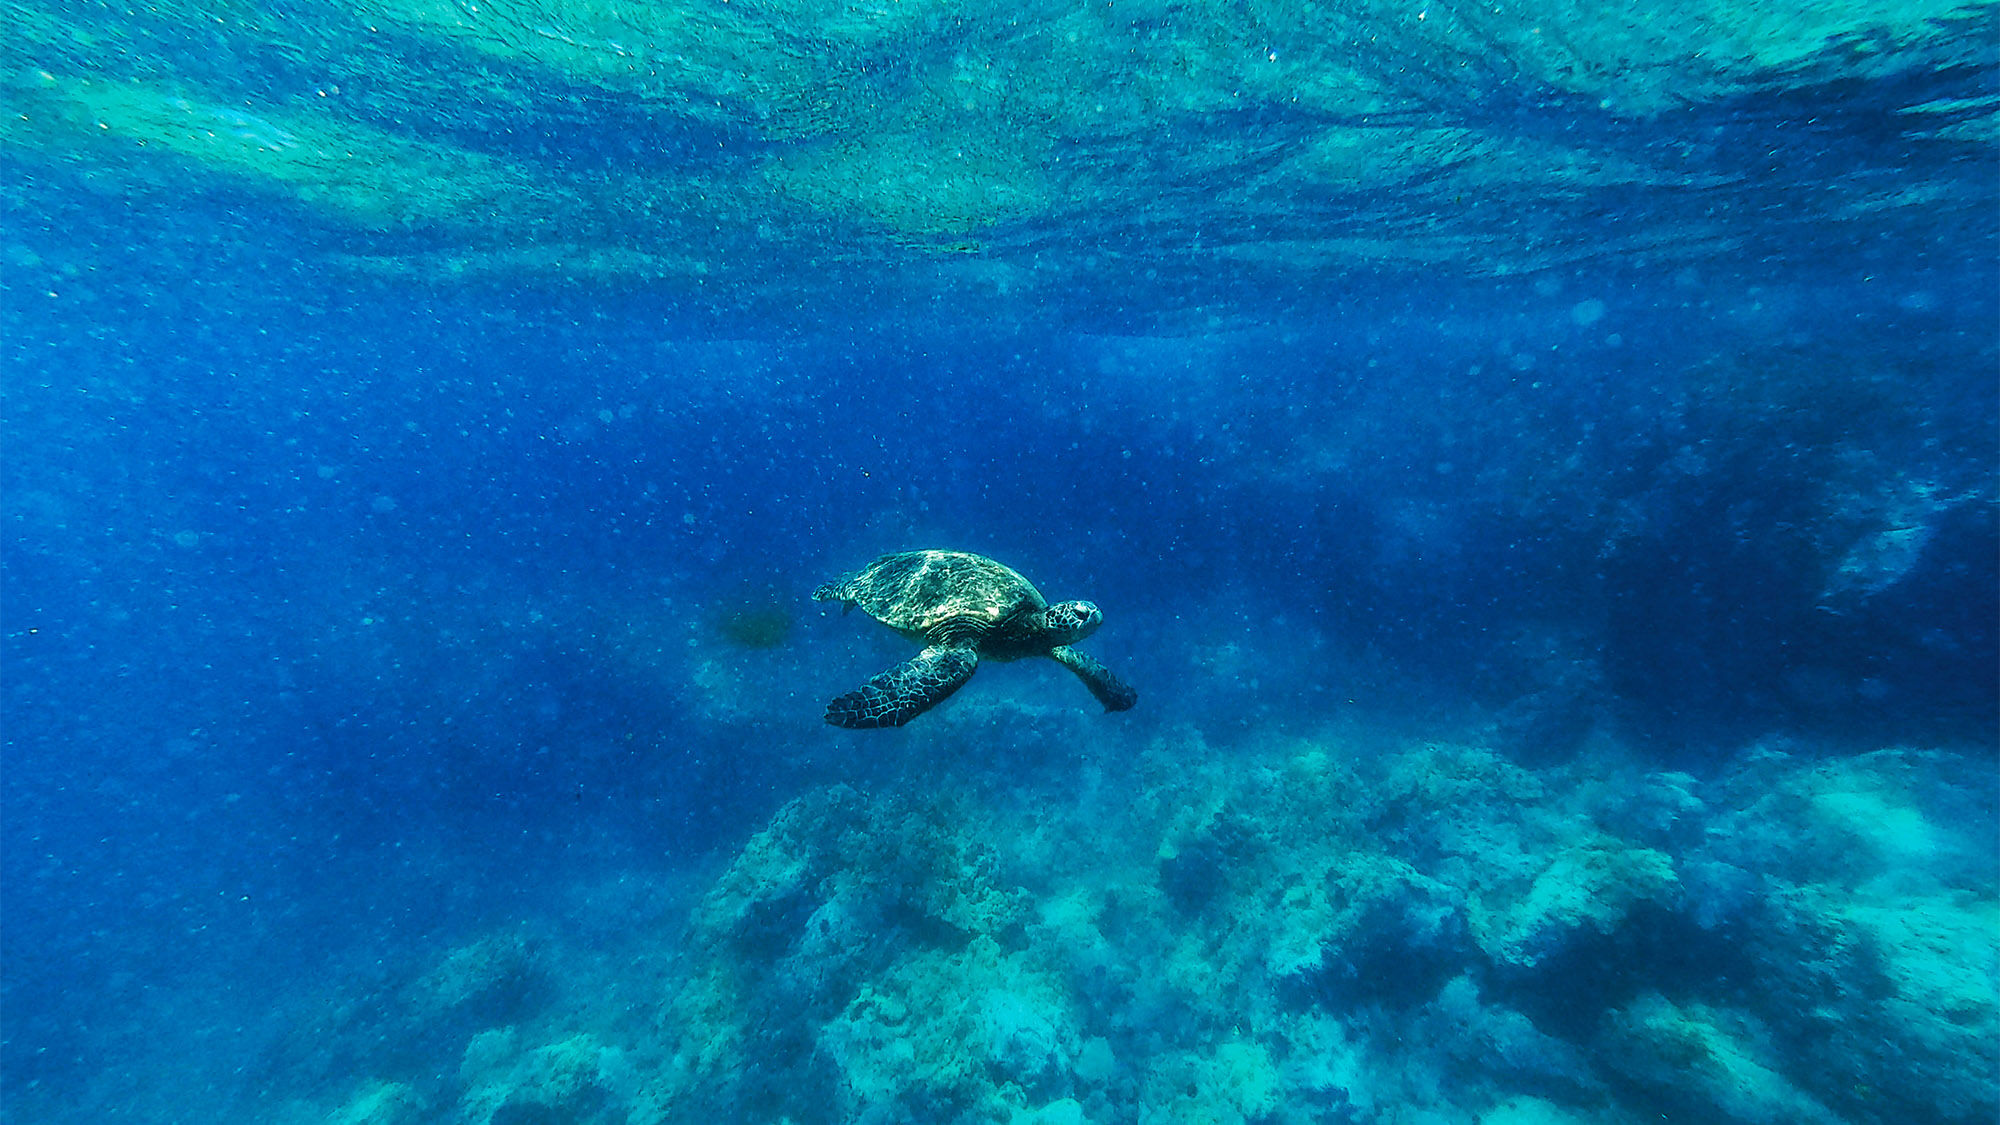 A Hawaiian green sea turtle spotted on a snorkeling tour off the coast of Maui.